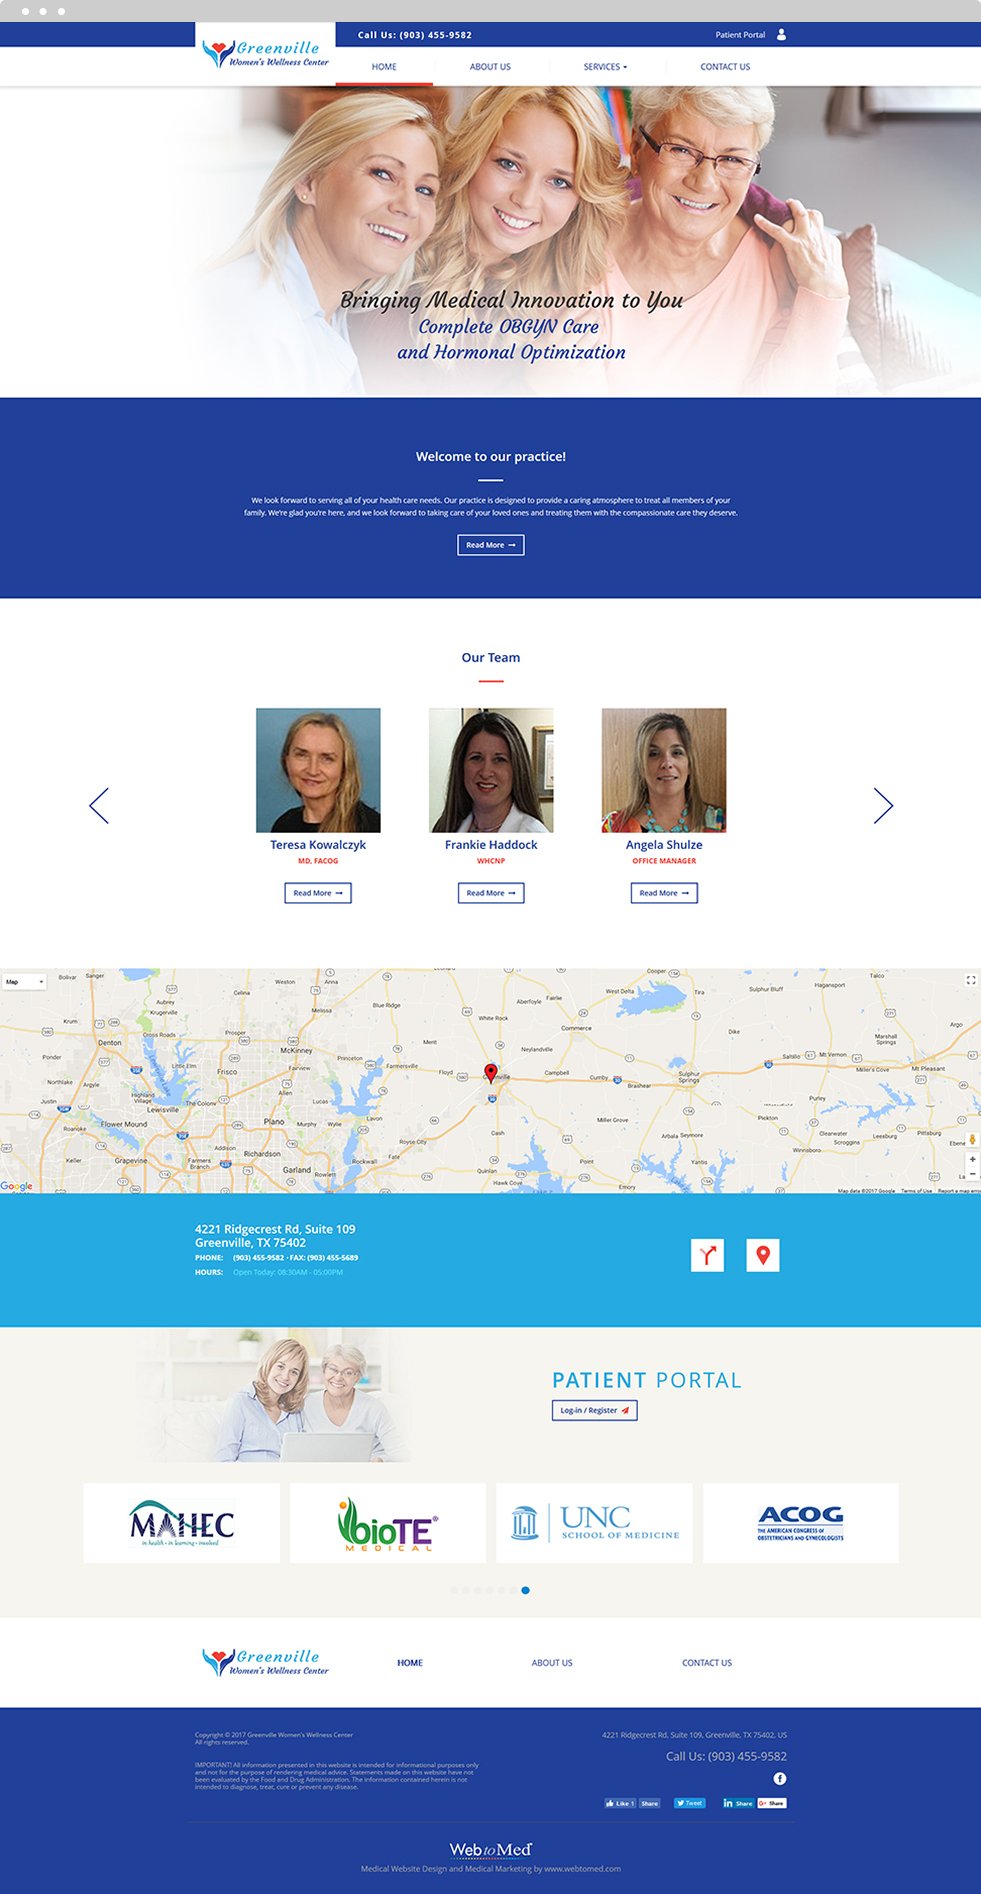 OBGYN Website Design - Greenville Women's Wellness Center - Homepage